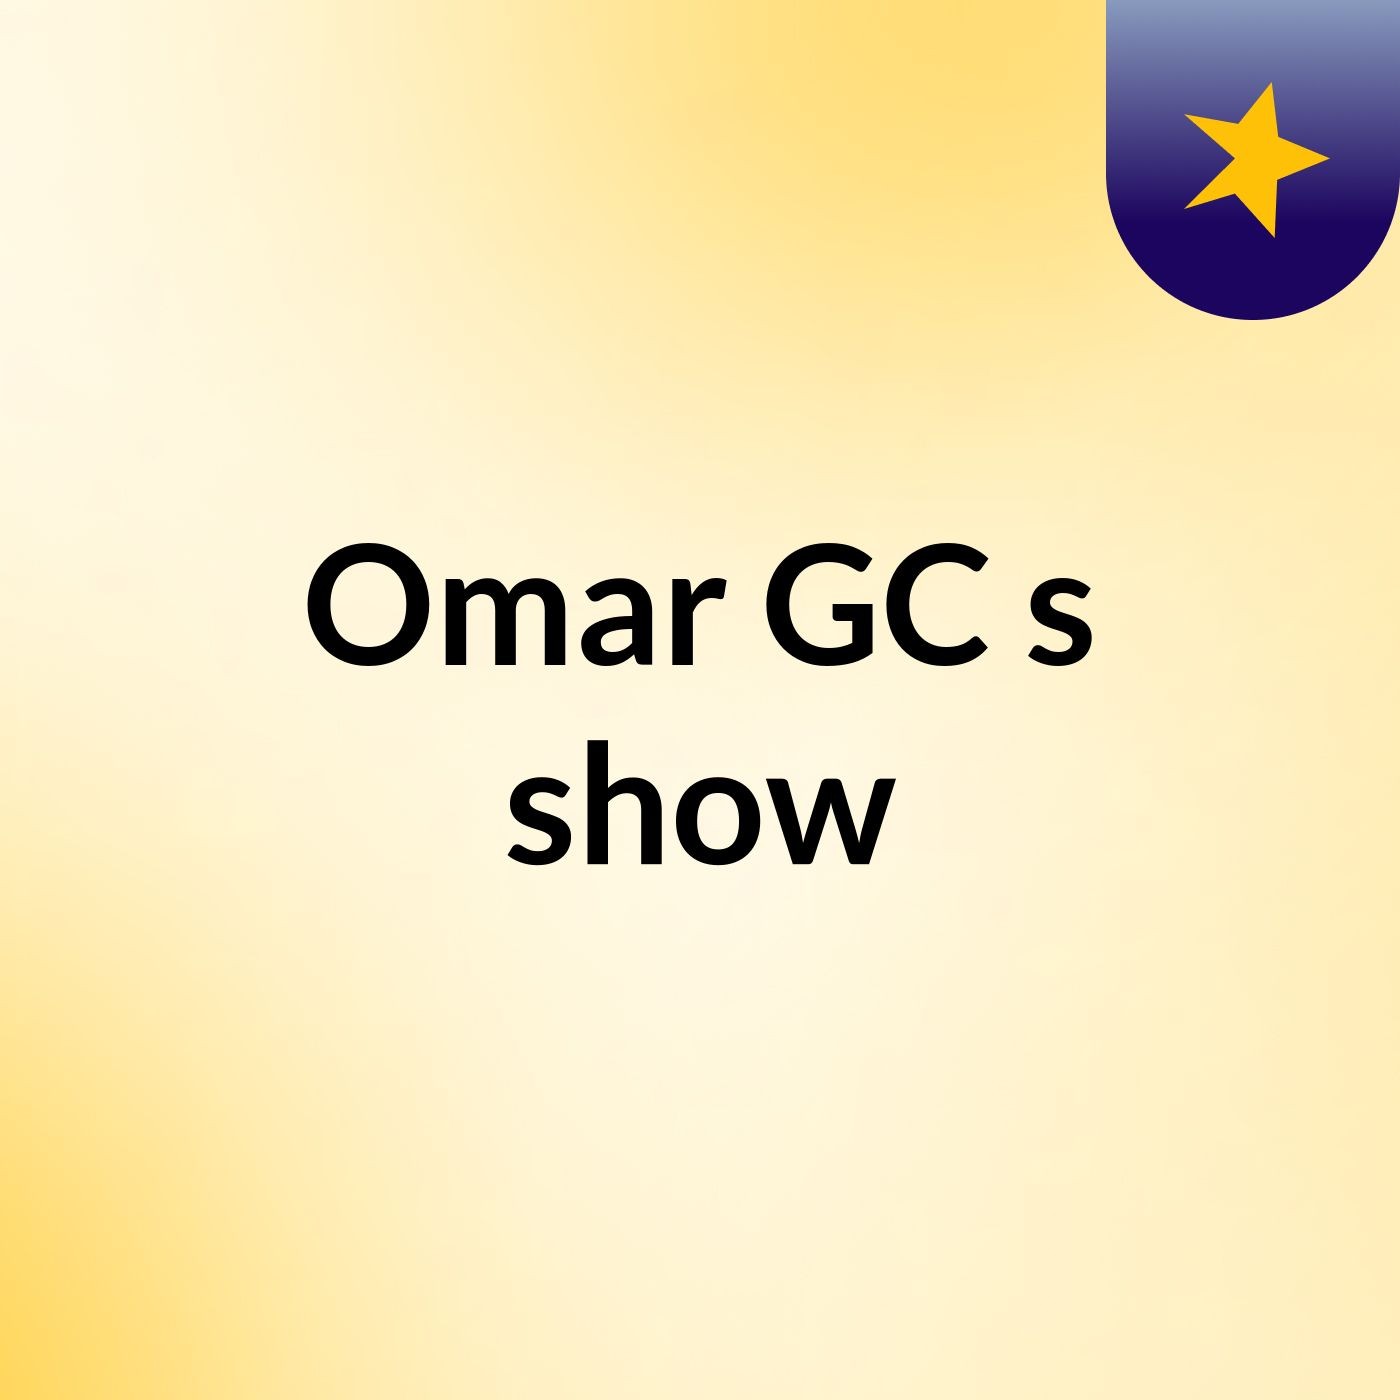 Omar GC's show